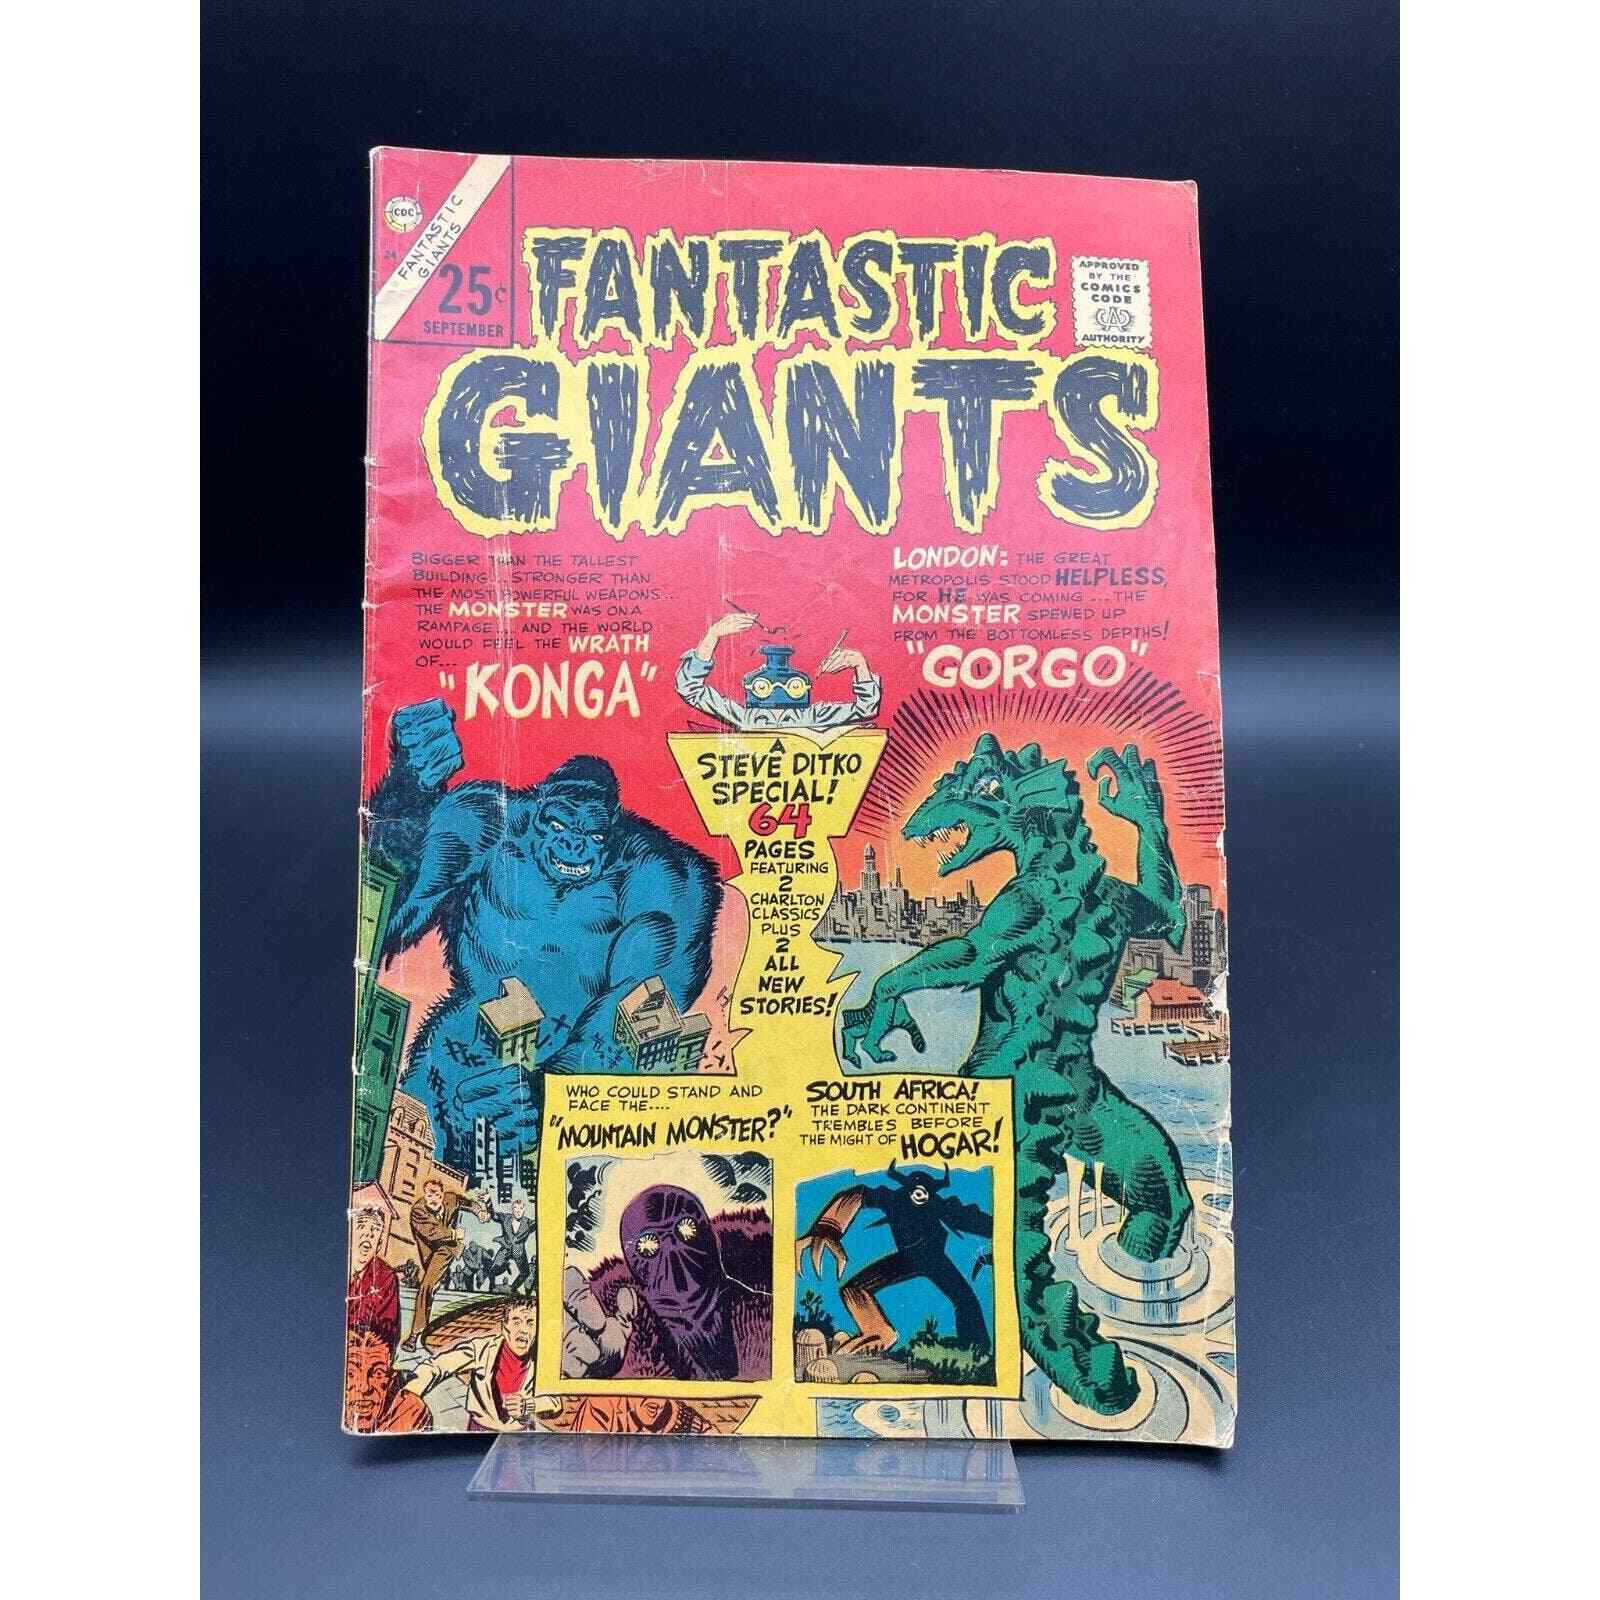 Fantastic Giants Vol 2 #24 [1966 FN-] Konga & Gorgo Silver Age Ditko Charlton